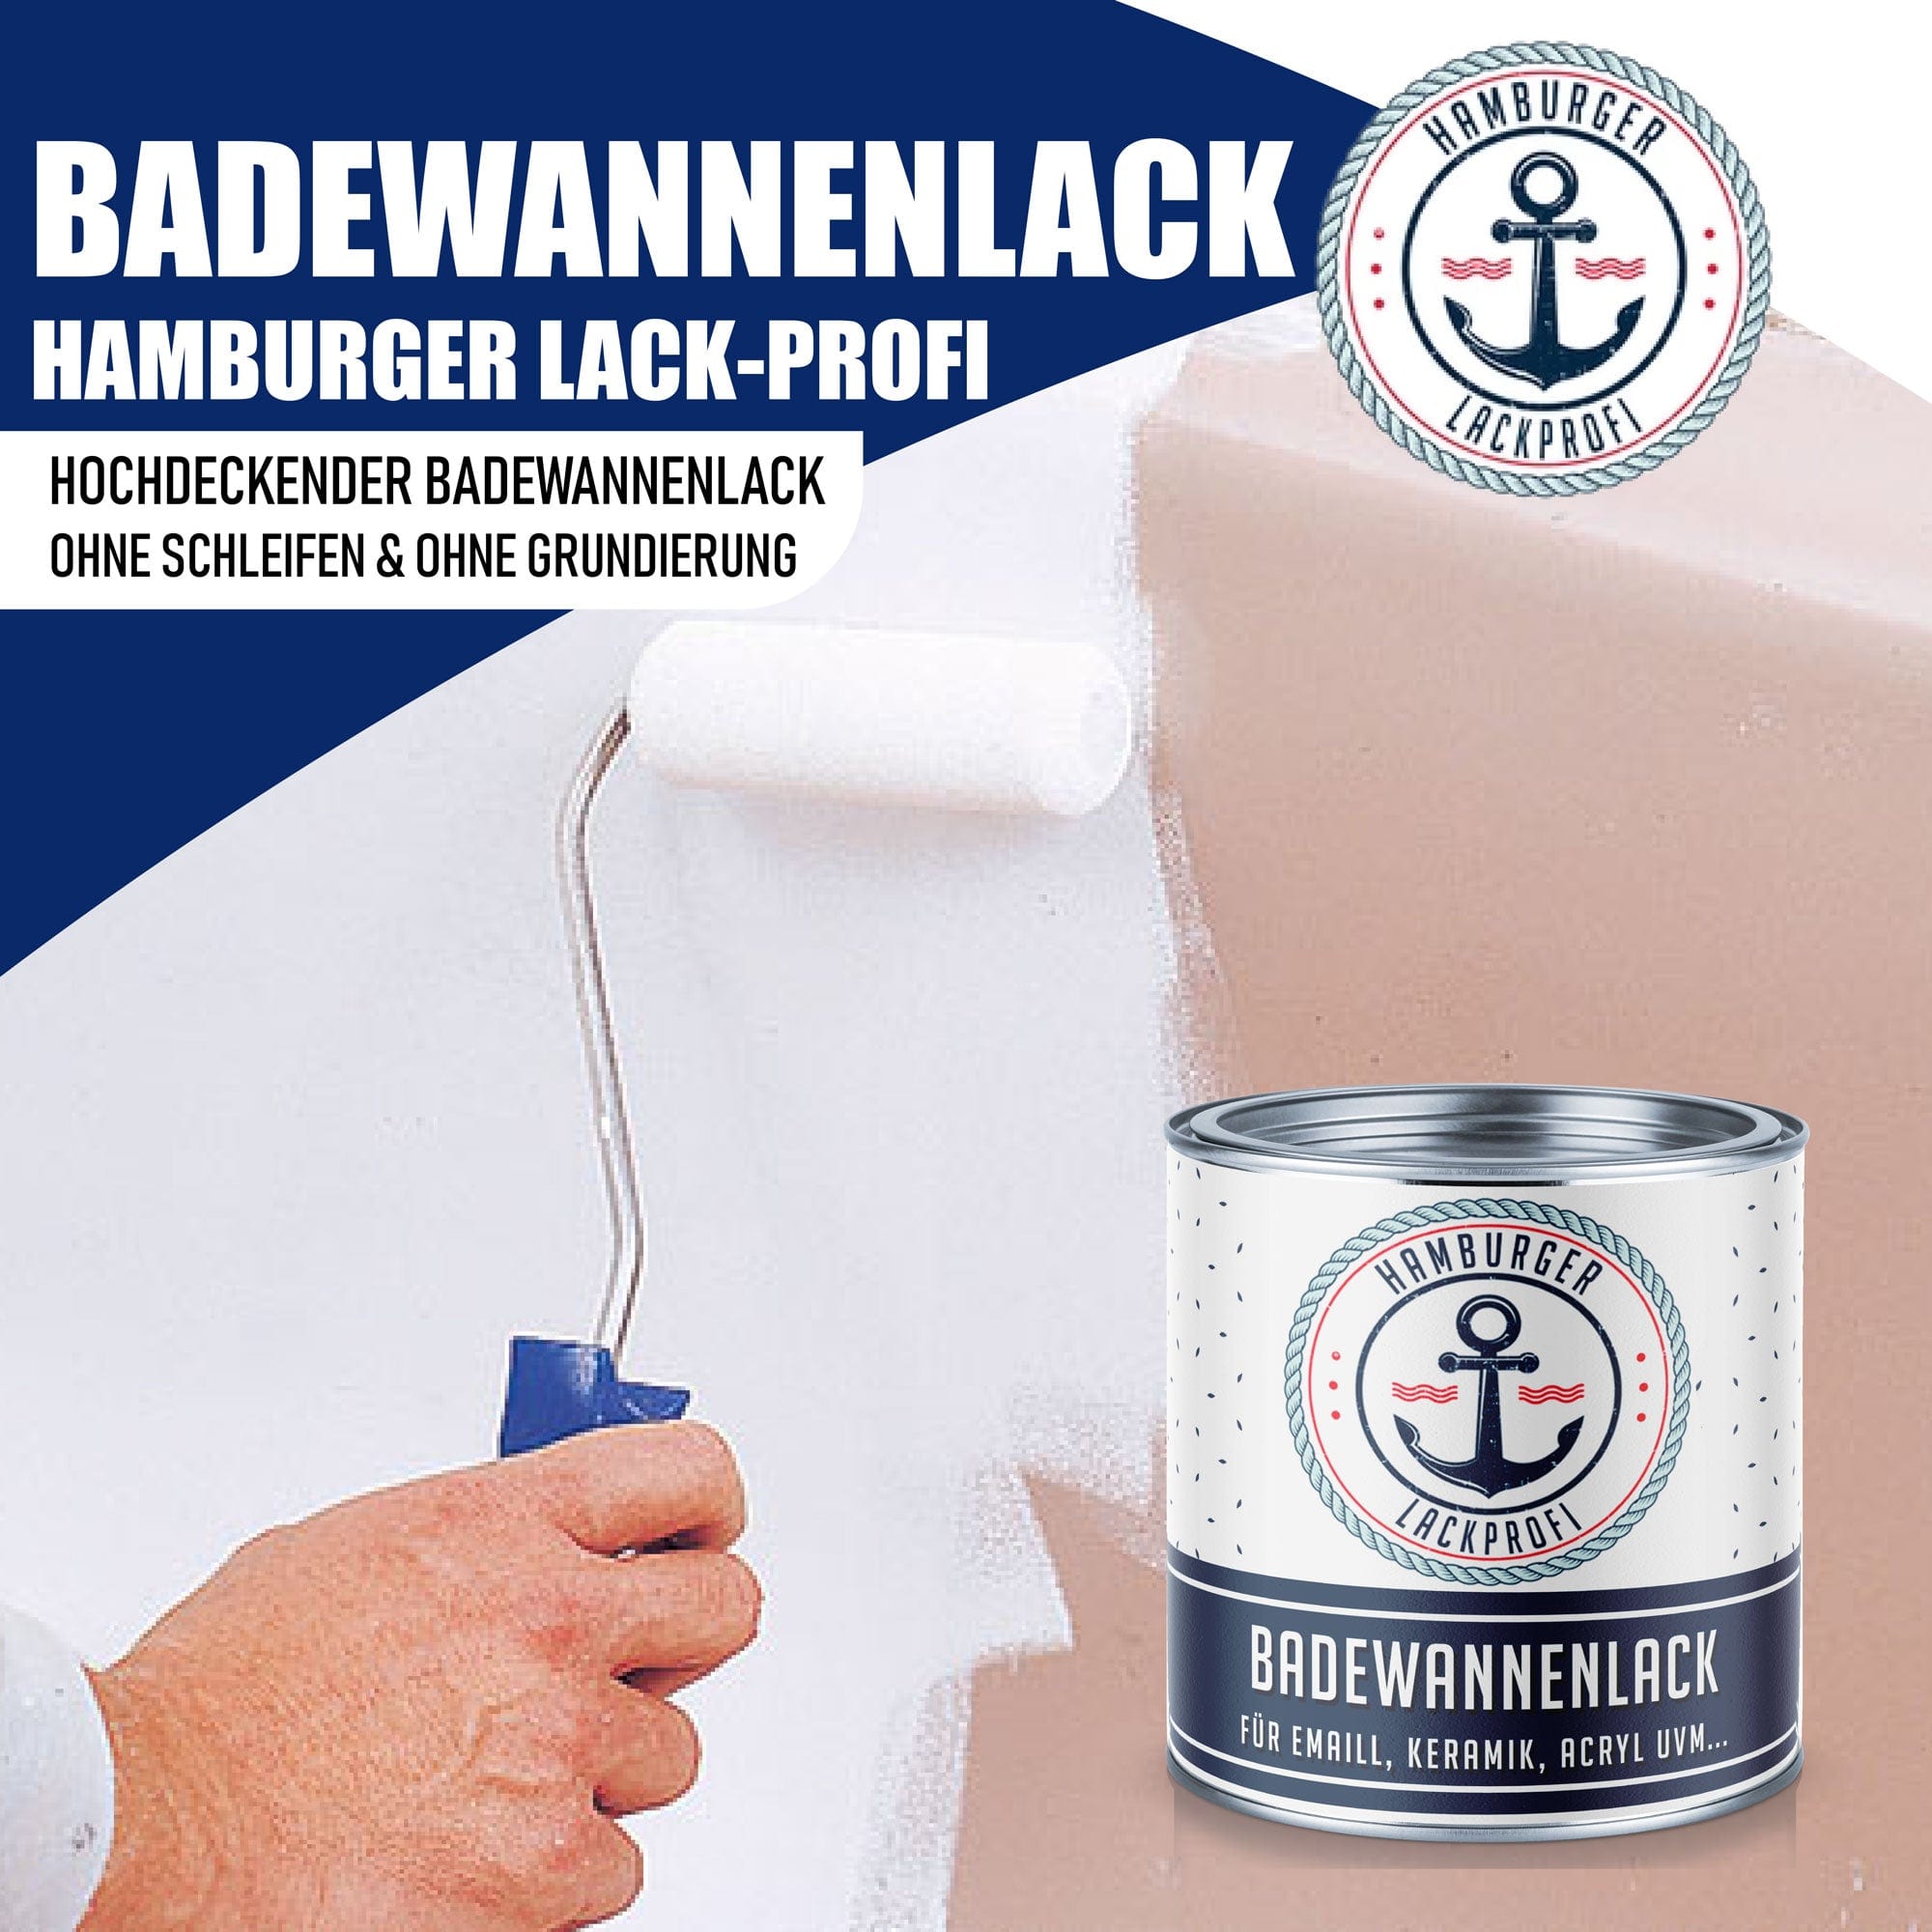 Hamburger Lack-Profi Badewannenlack Hamburger Lack-Profi 2K Badewannenlack Graubeige RAL 1019 - Glänzend / Seidenmatt / Matt